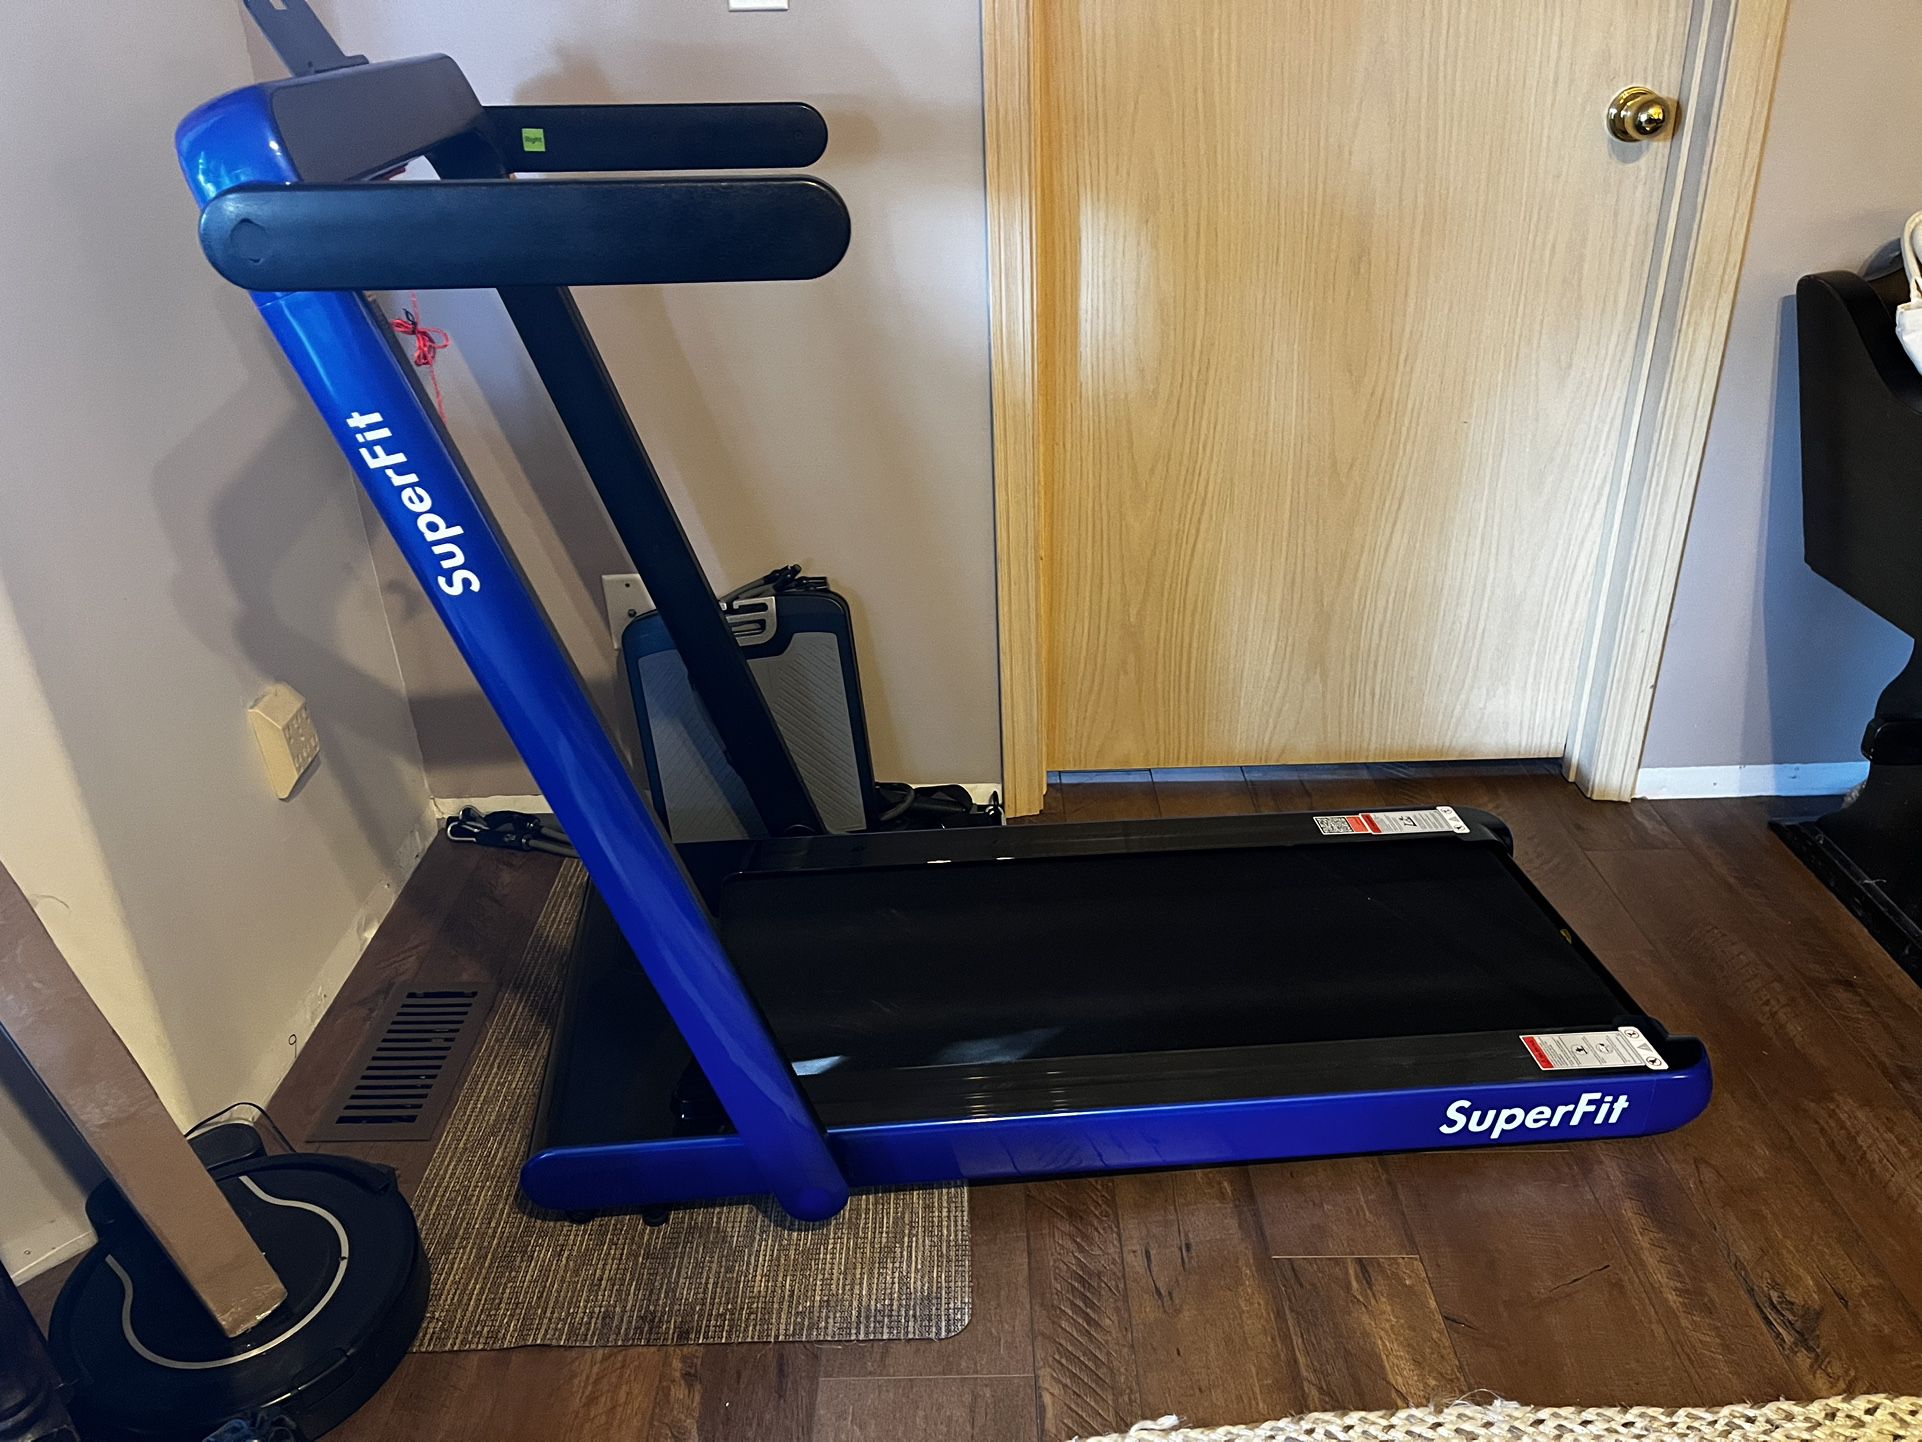 SuperFit Treadmill